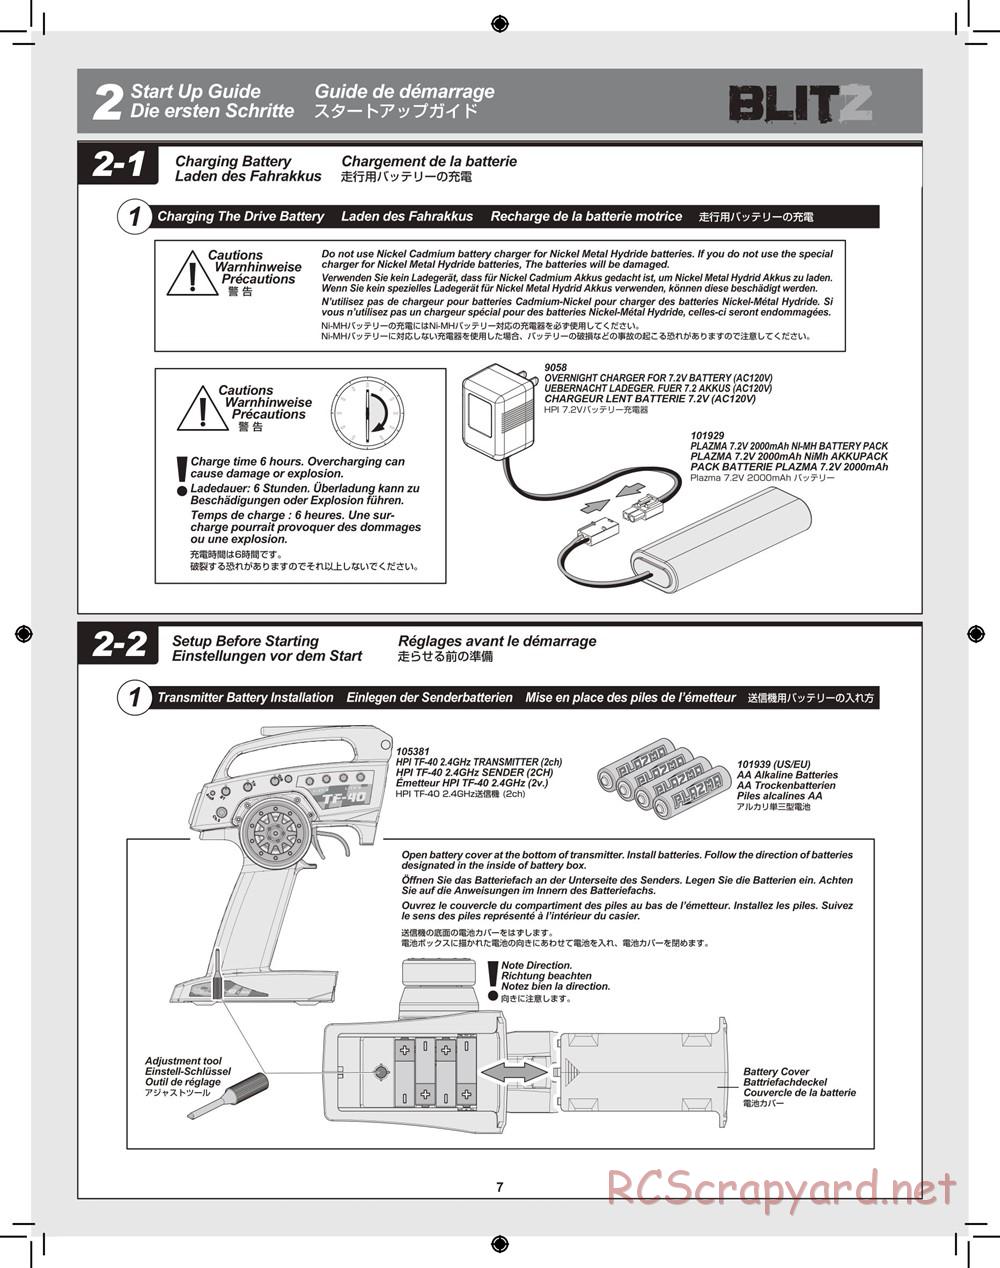 HPI - Blitz Waterproof - Manual - Page 7